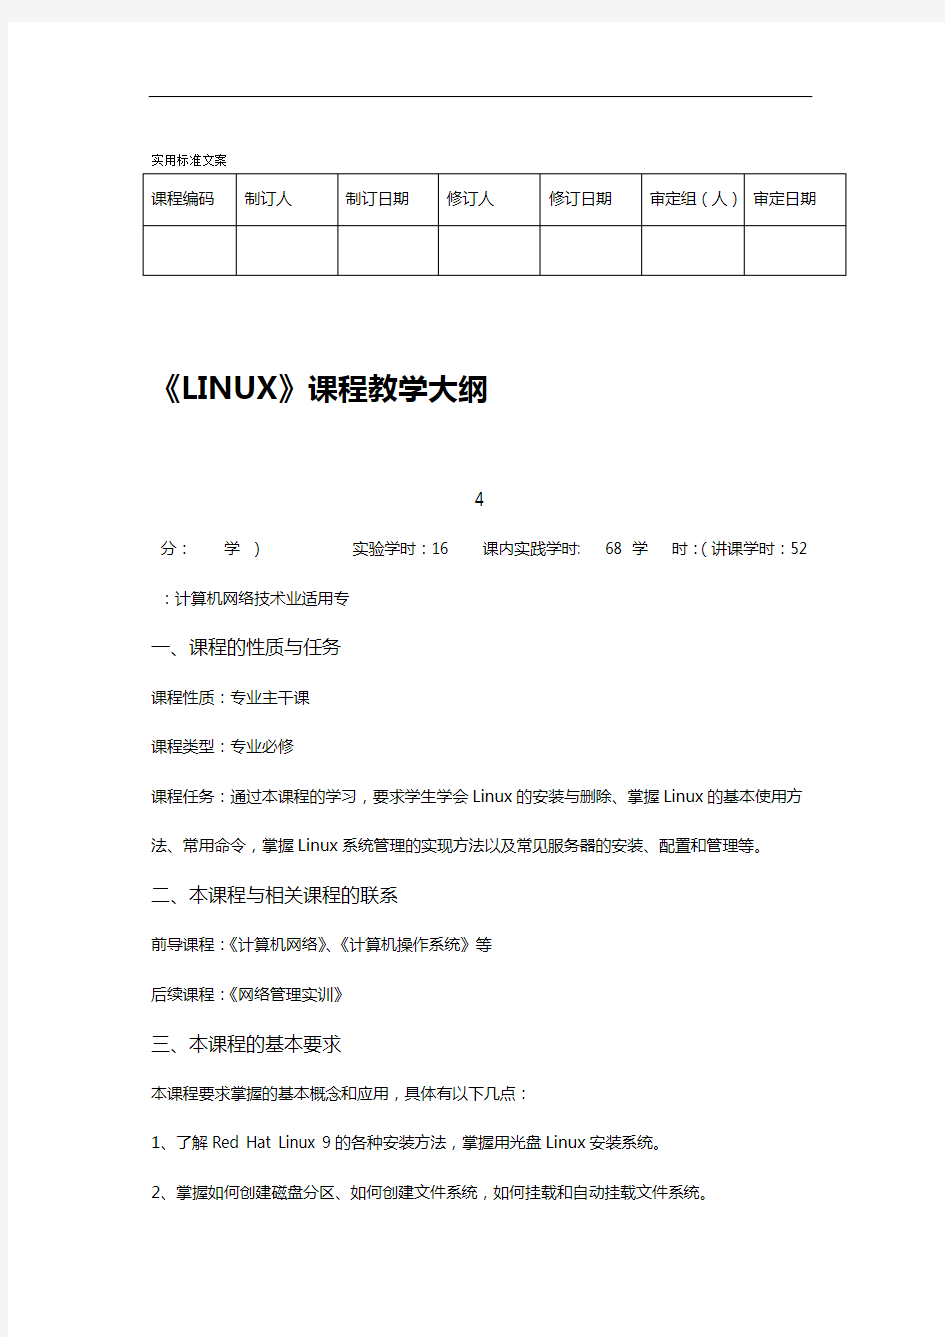 LINUX操作系统教学大纲设计